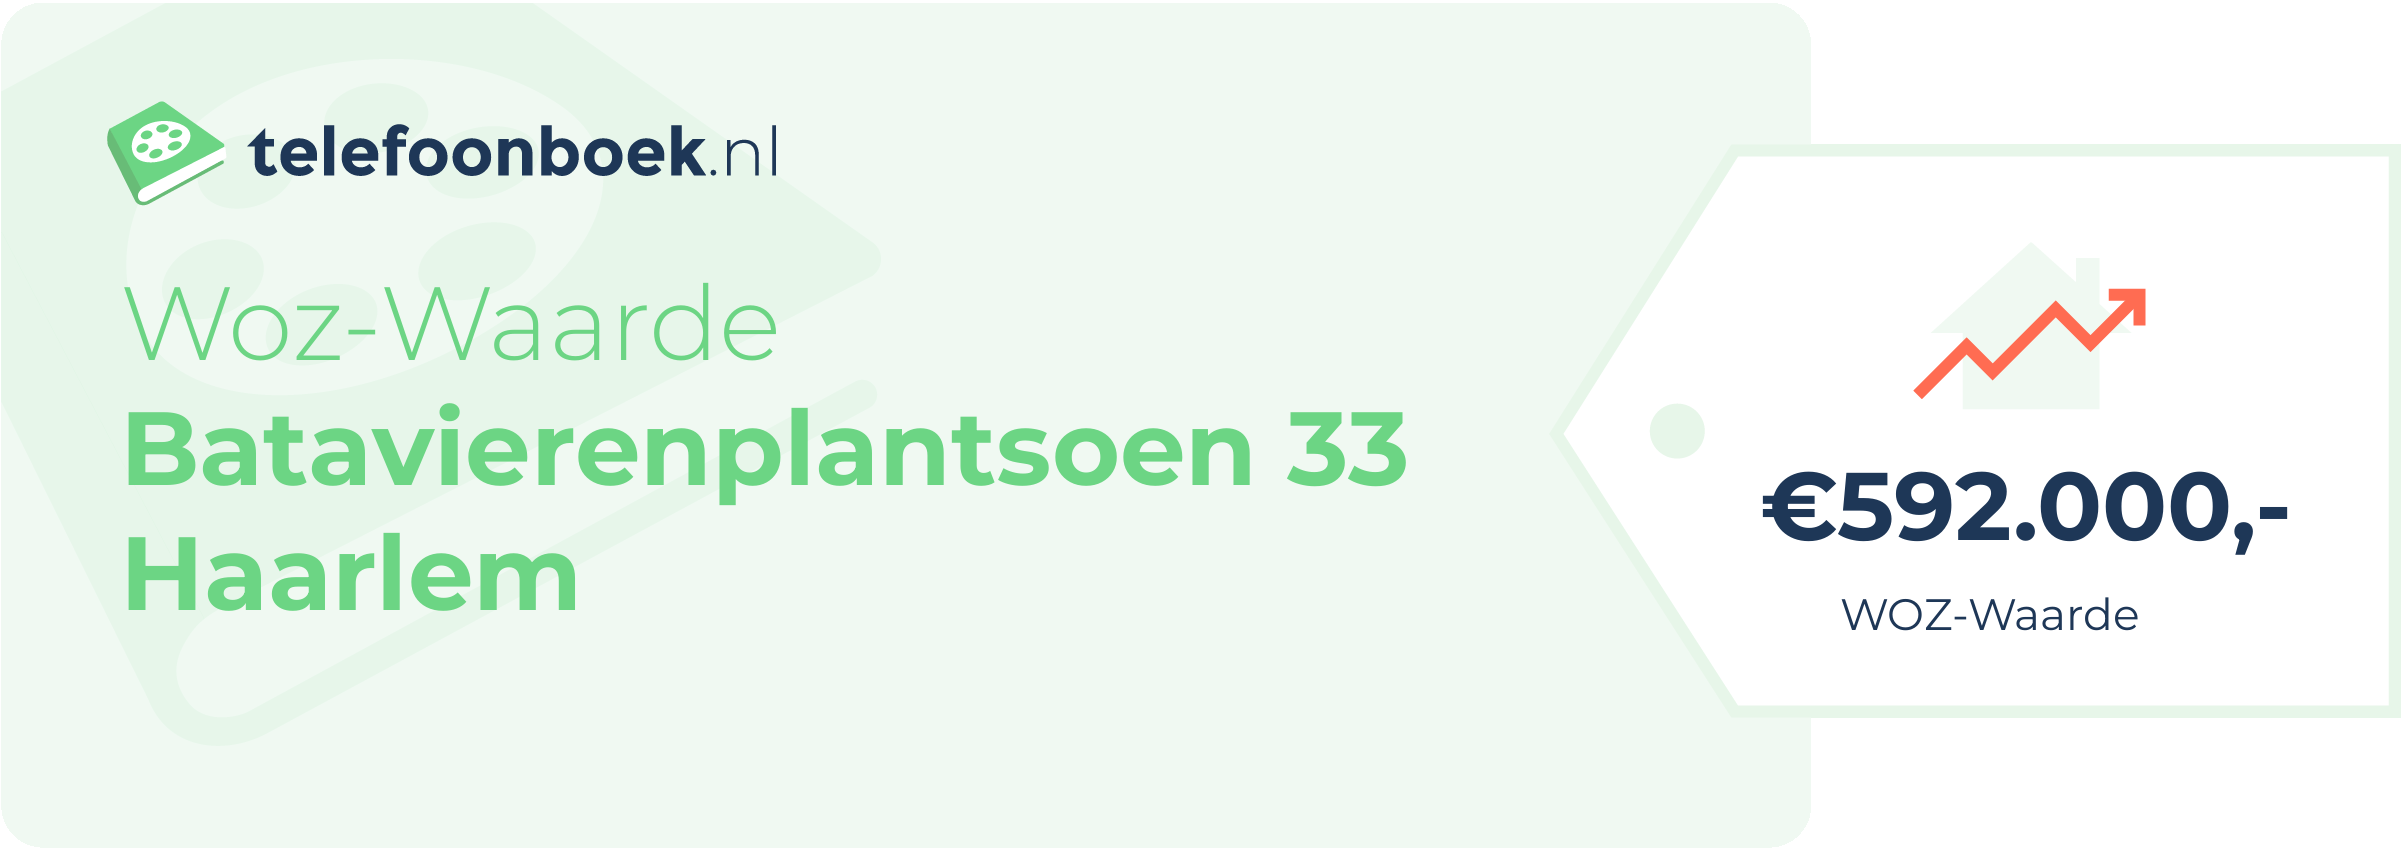 WOZ-waarde Batavierenplantsoen 33 Haarlem